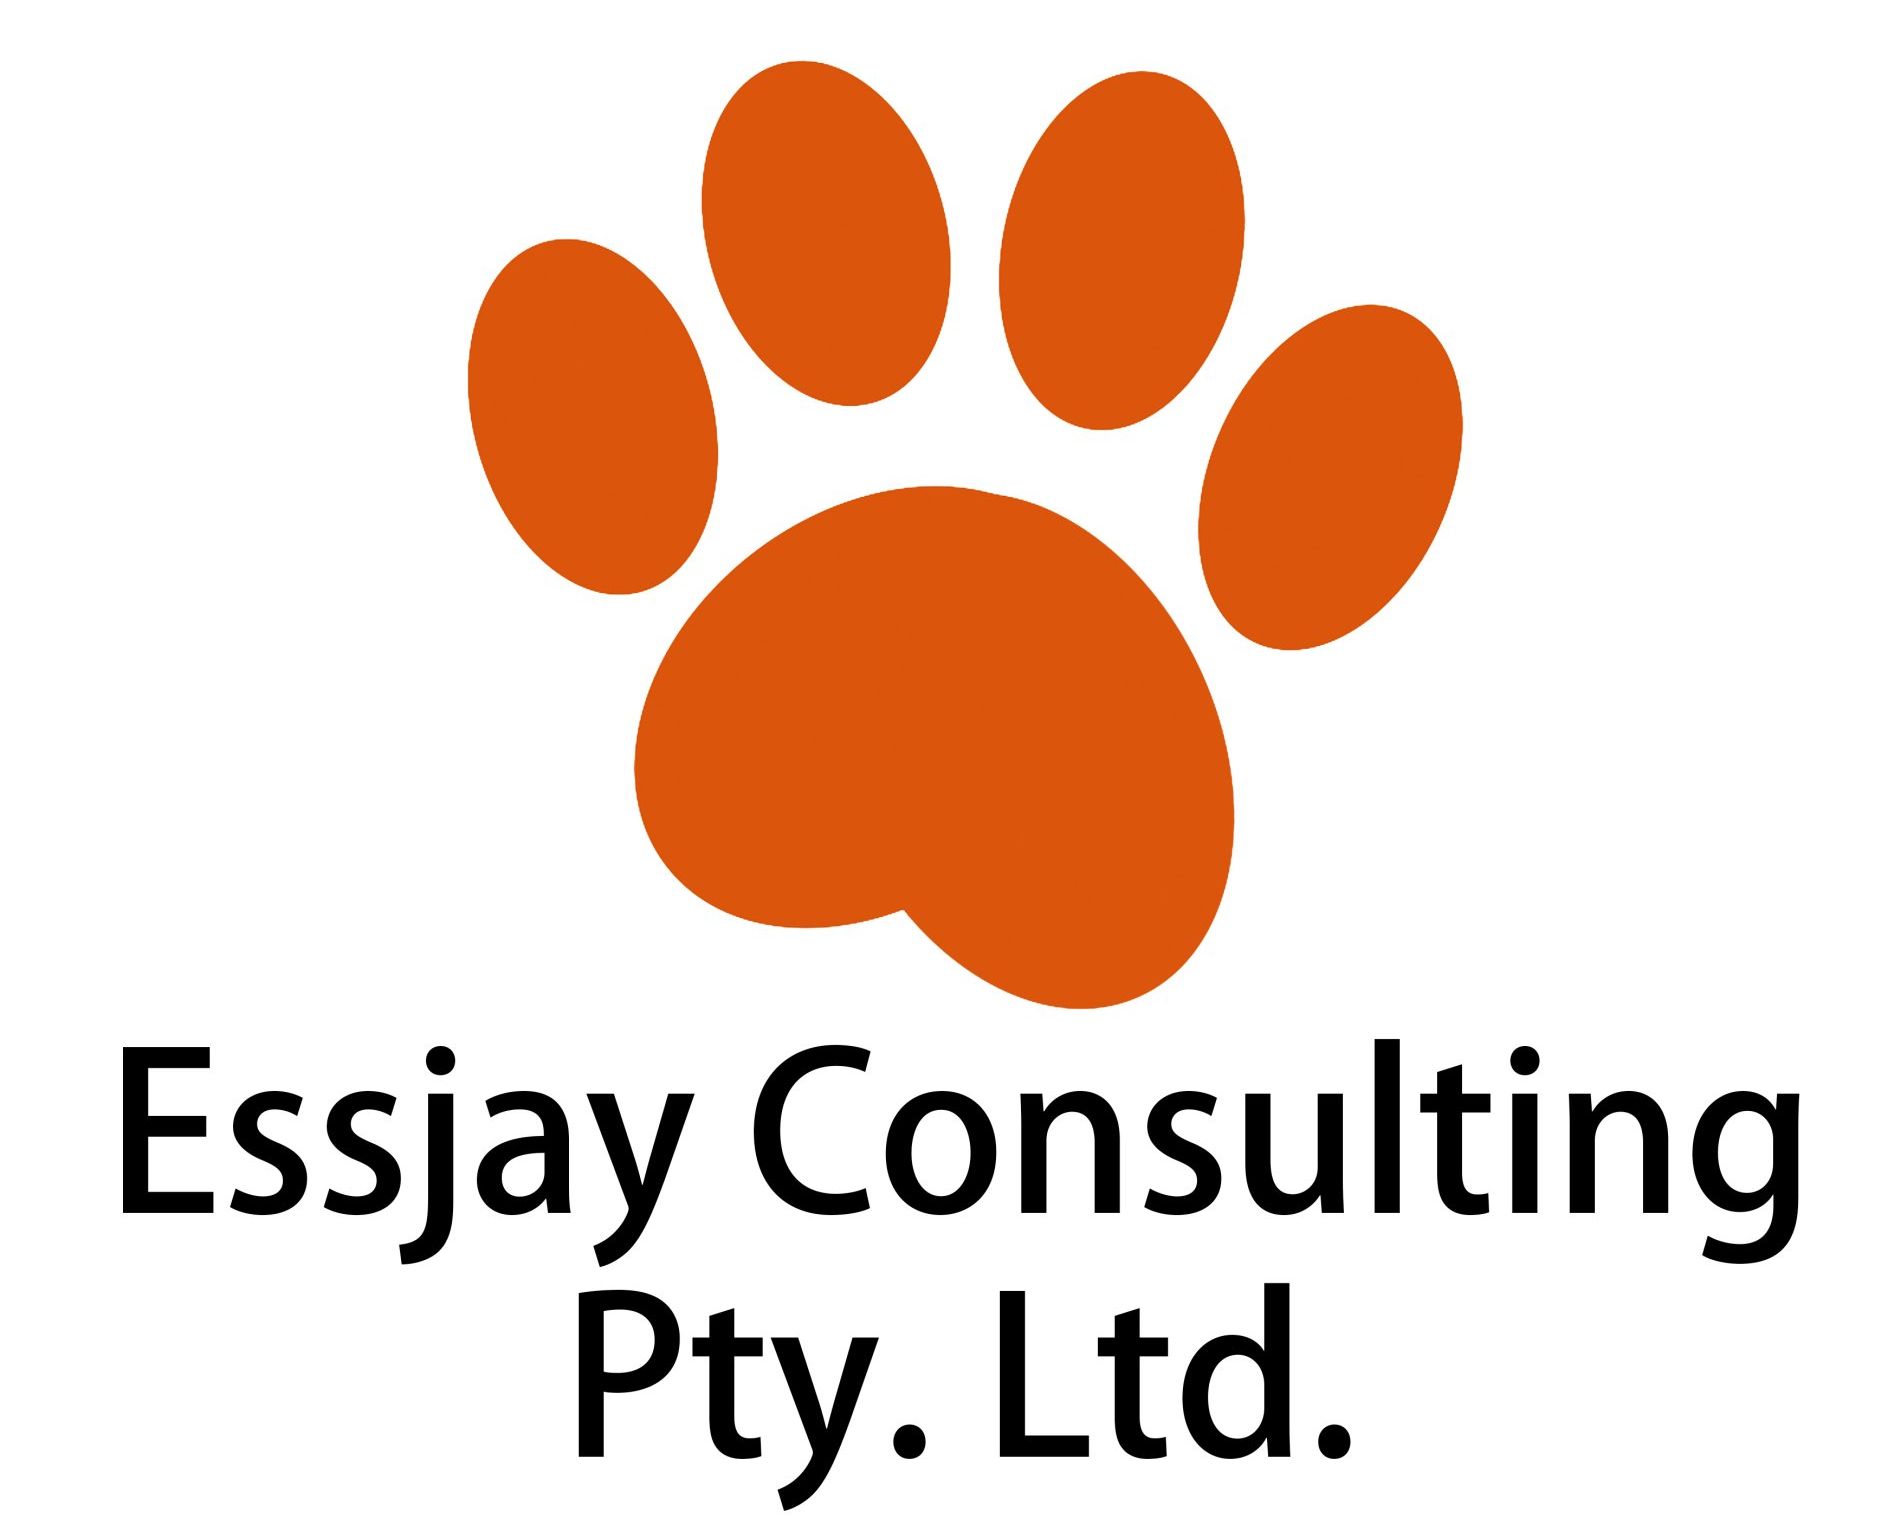 Essjay Consulting Pty. Ltd.